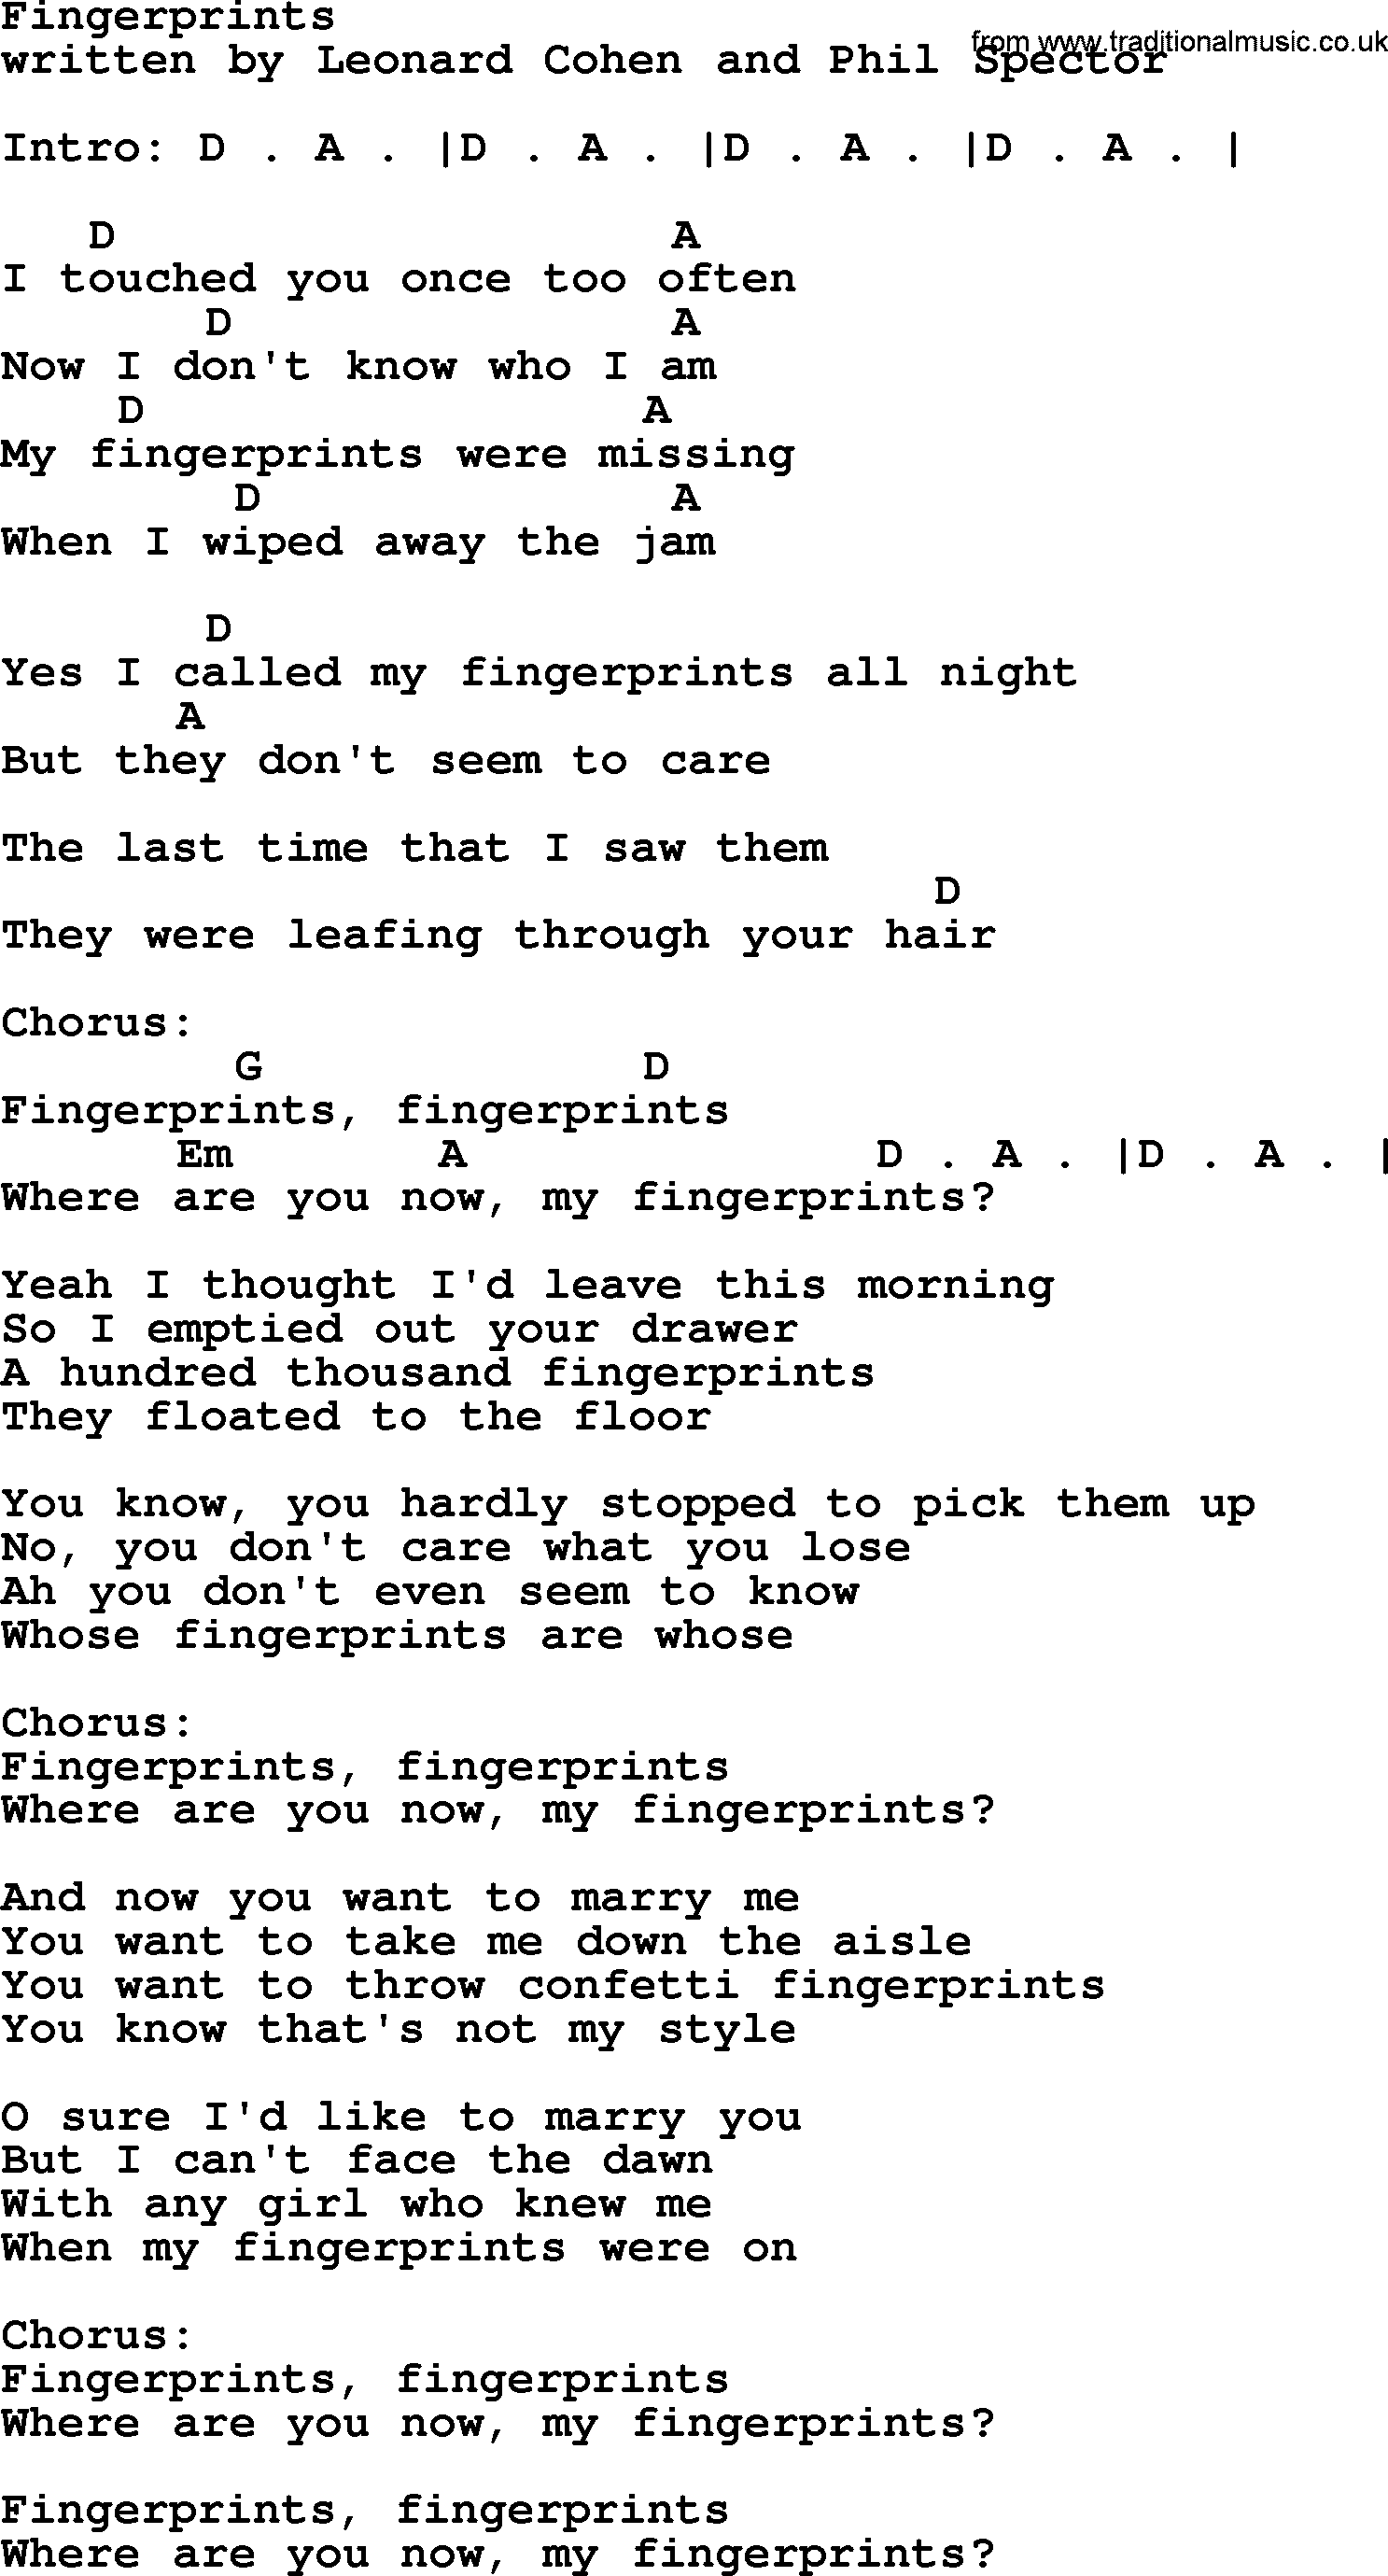 Leonard Cohen song Fingerprints, lyrics and chords